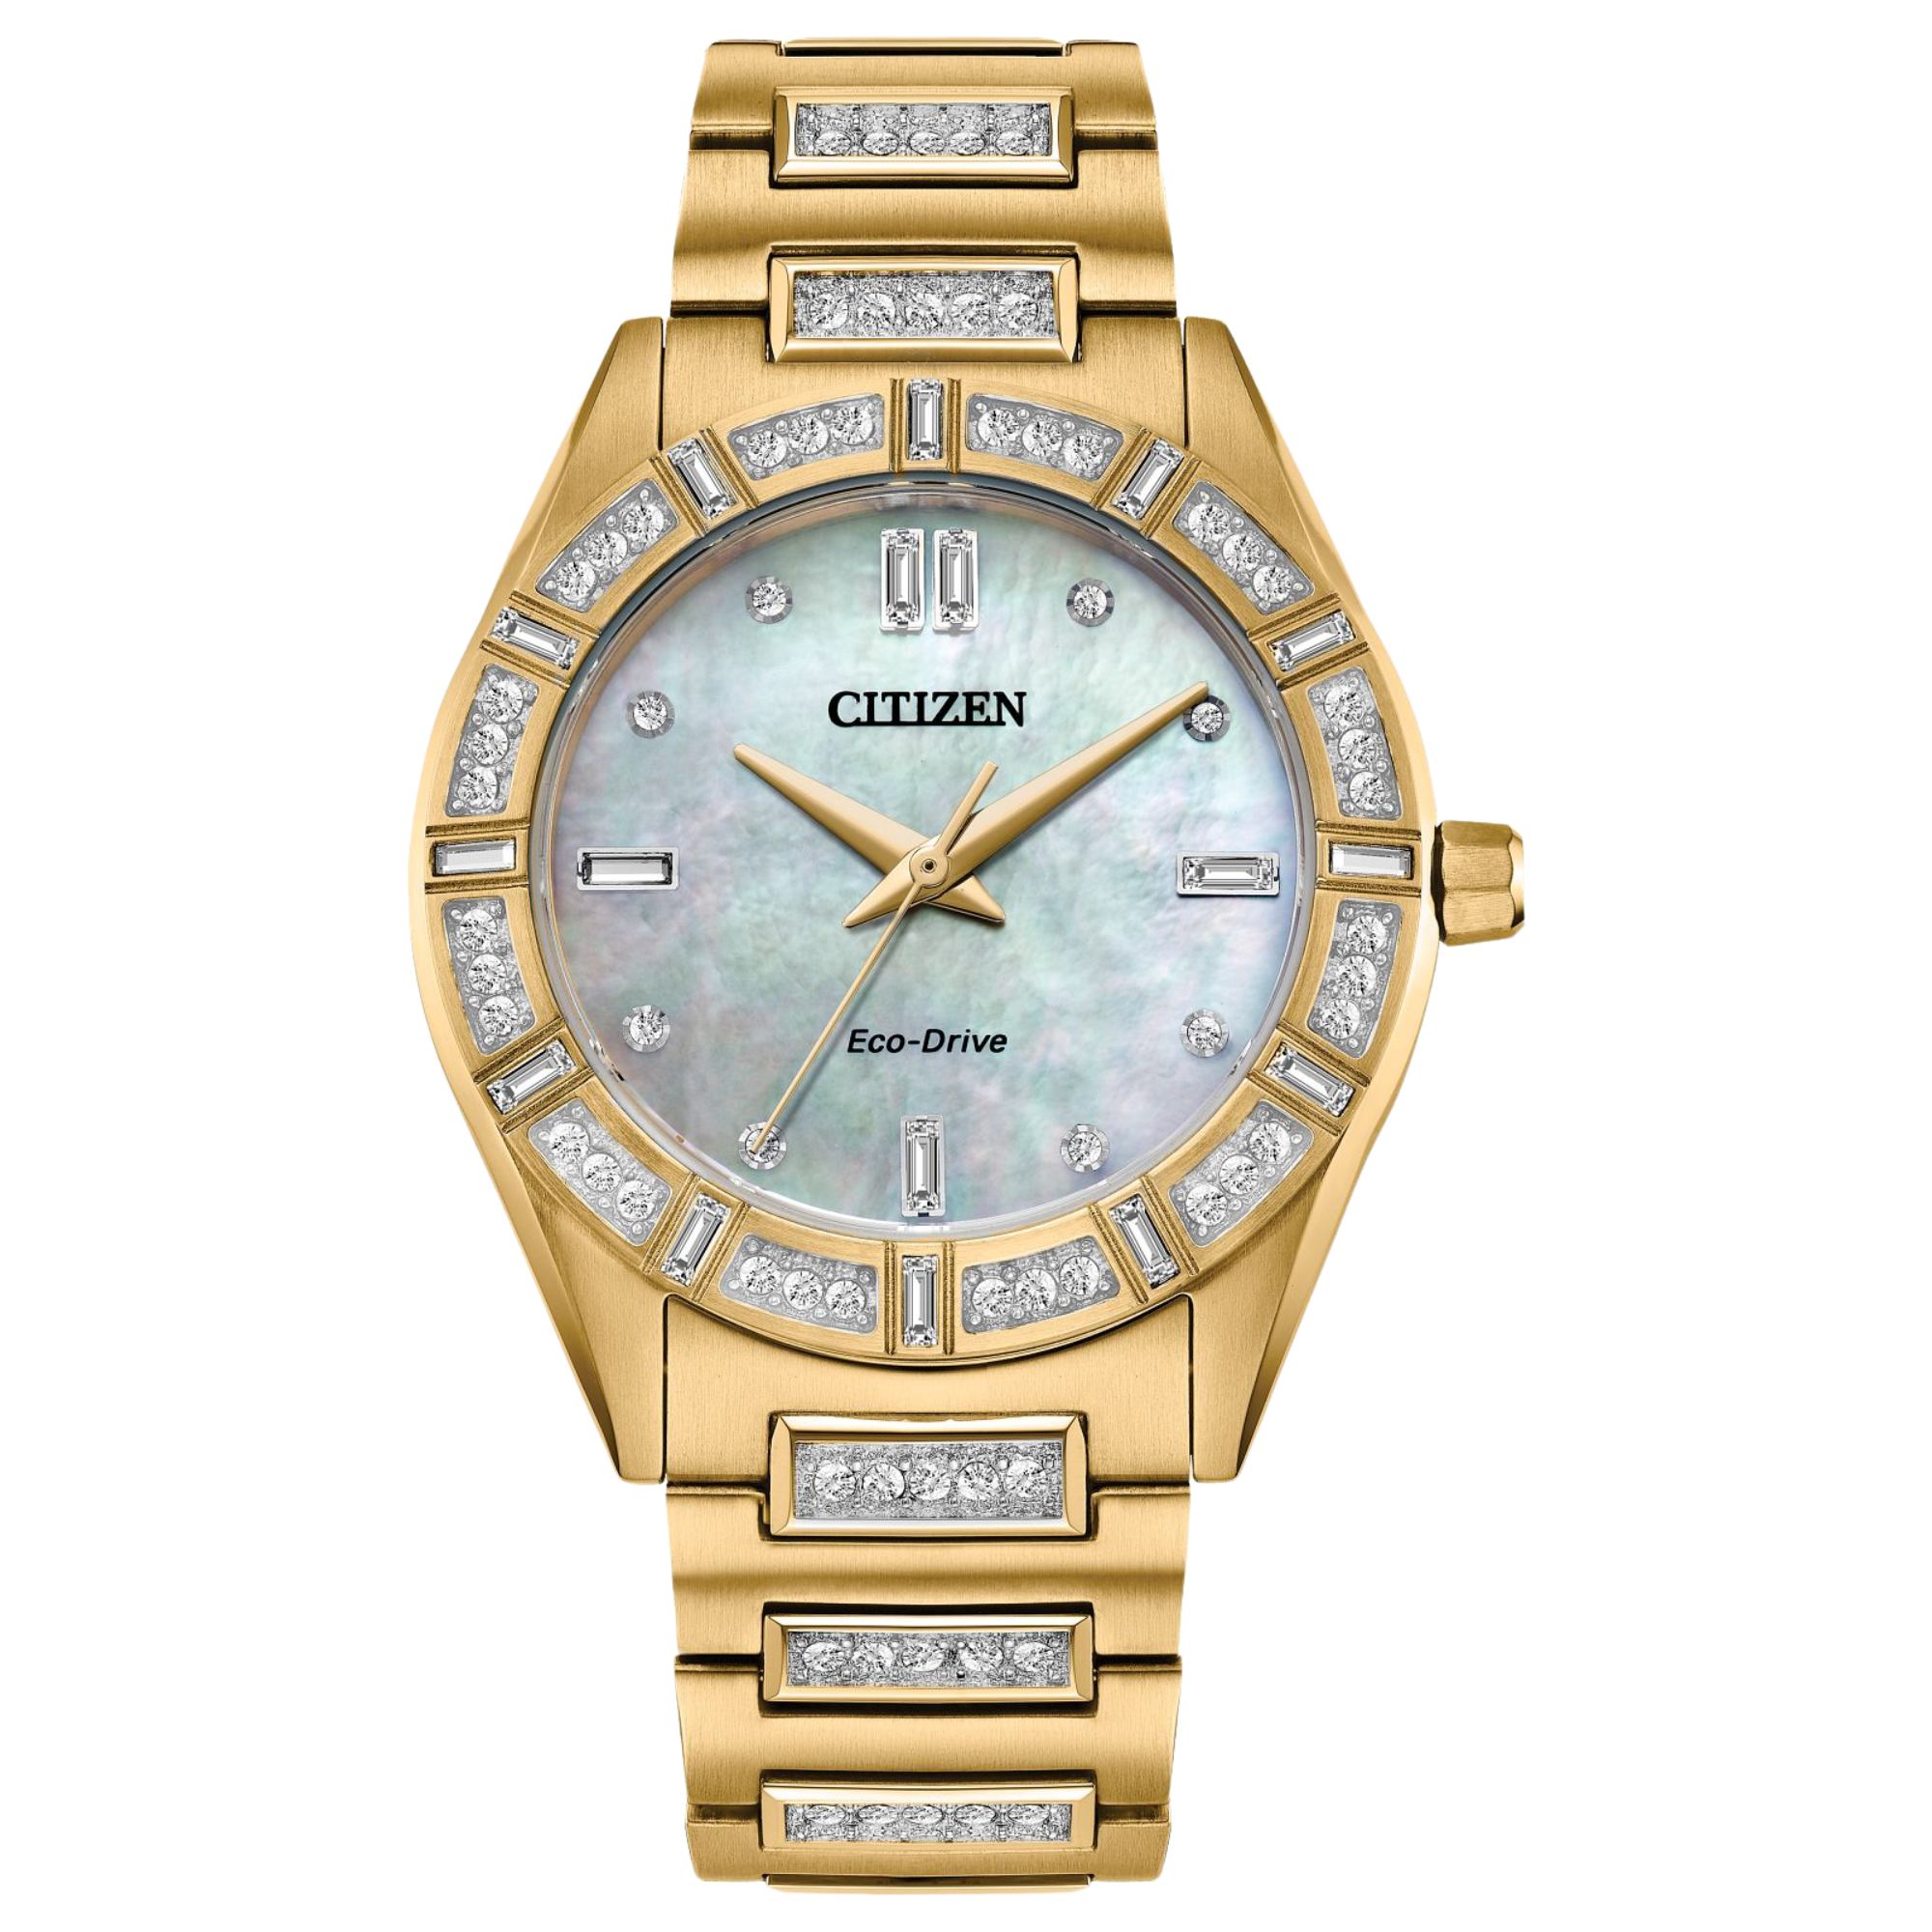 Relógio Citizen Silhouette Crystal Eco-Drive Ladies Dourado EM1022-51D